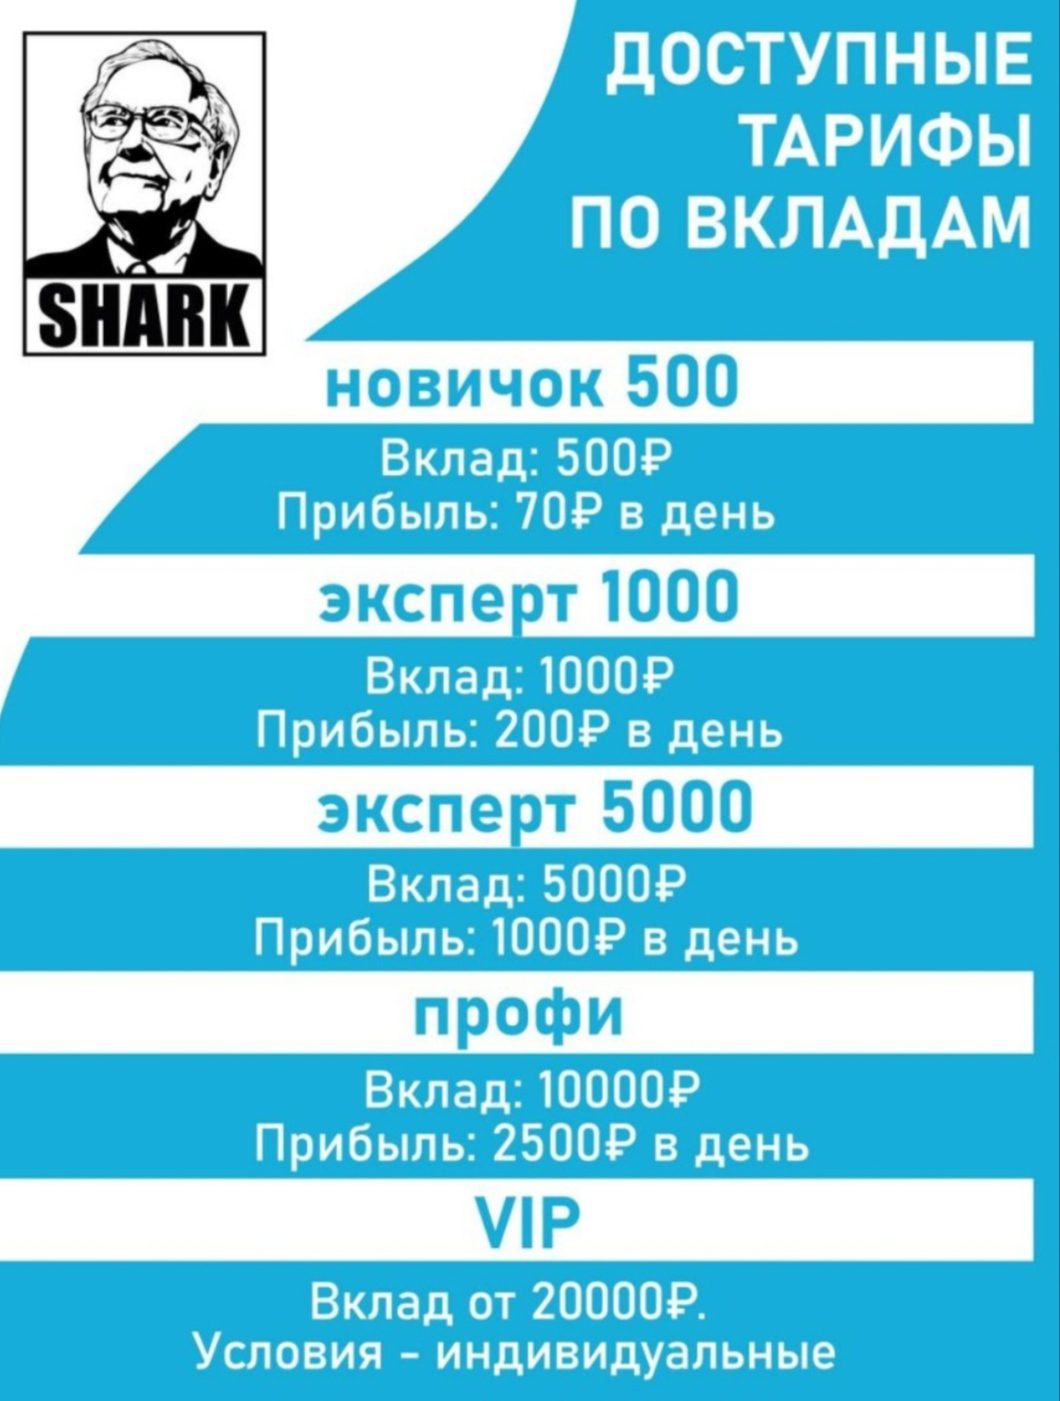 Sharkfond телеграмм